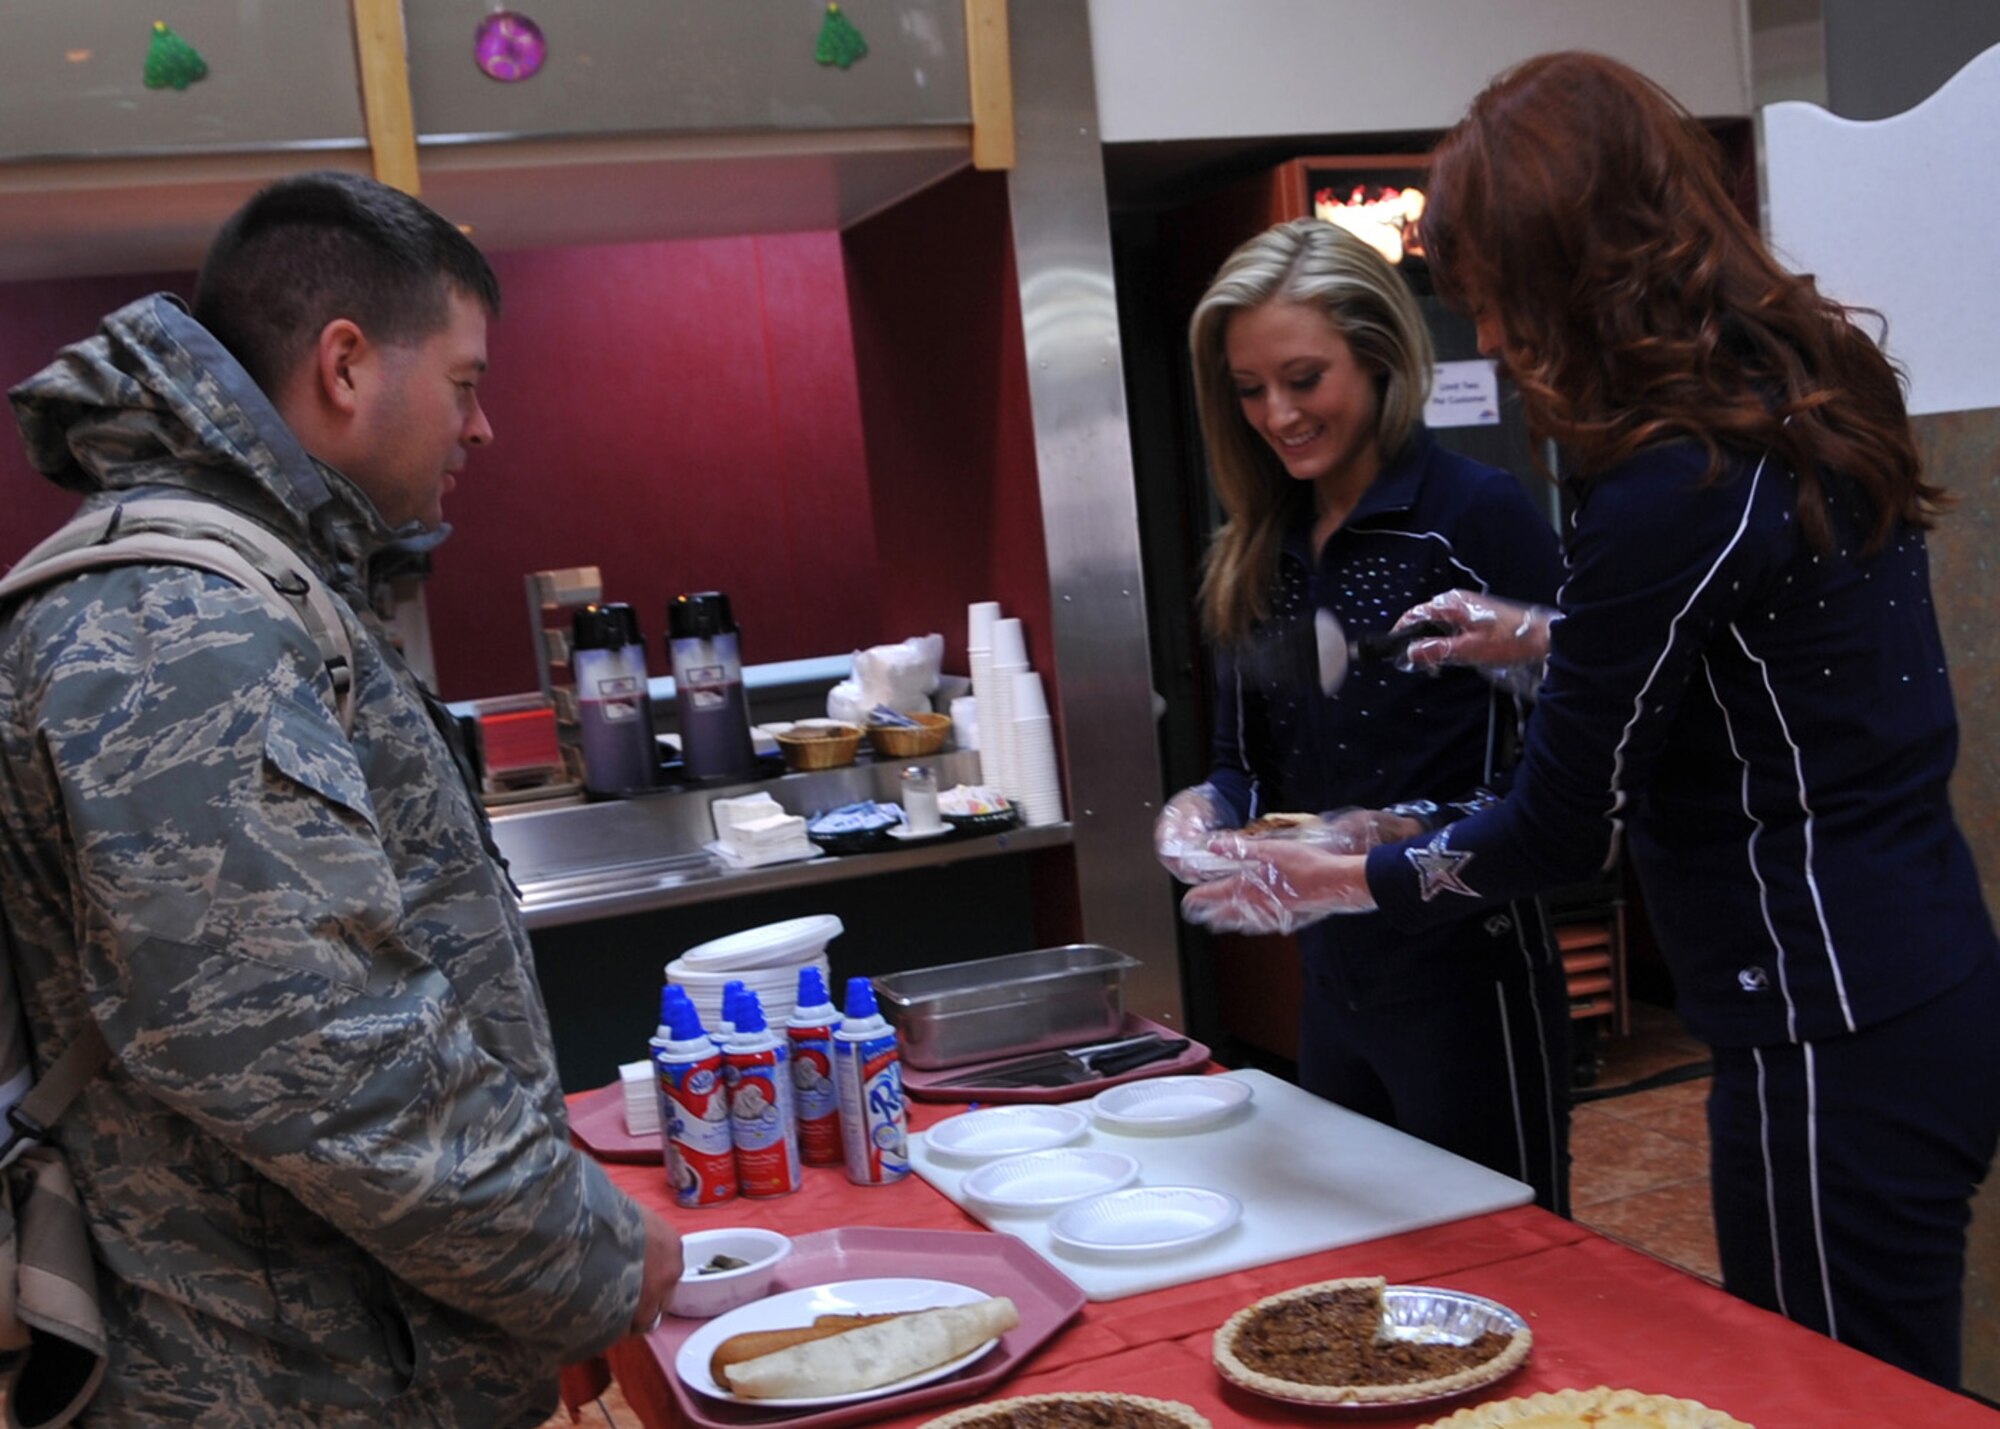 Dallas Cowboys Cheerleaders serve dessert to Airmen at Osan’s Gingko Tree dining facility during a base visit Dec. 29. (U.S. Air Force photo/Senior Airman Evelyn Chavez)